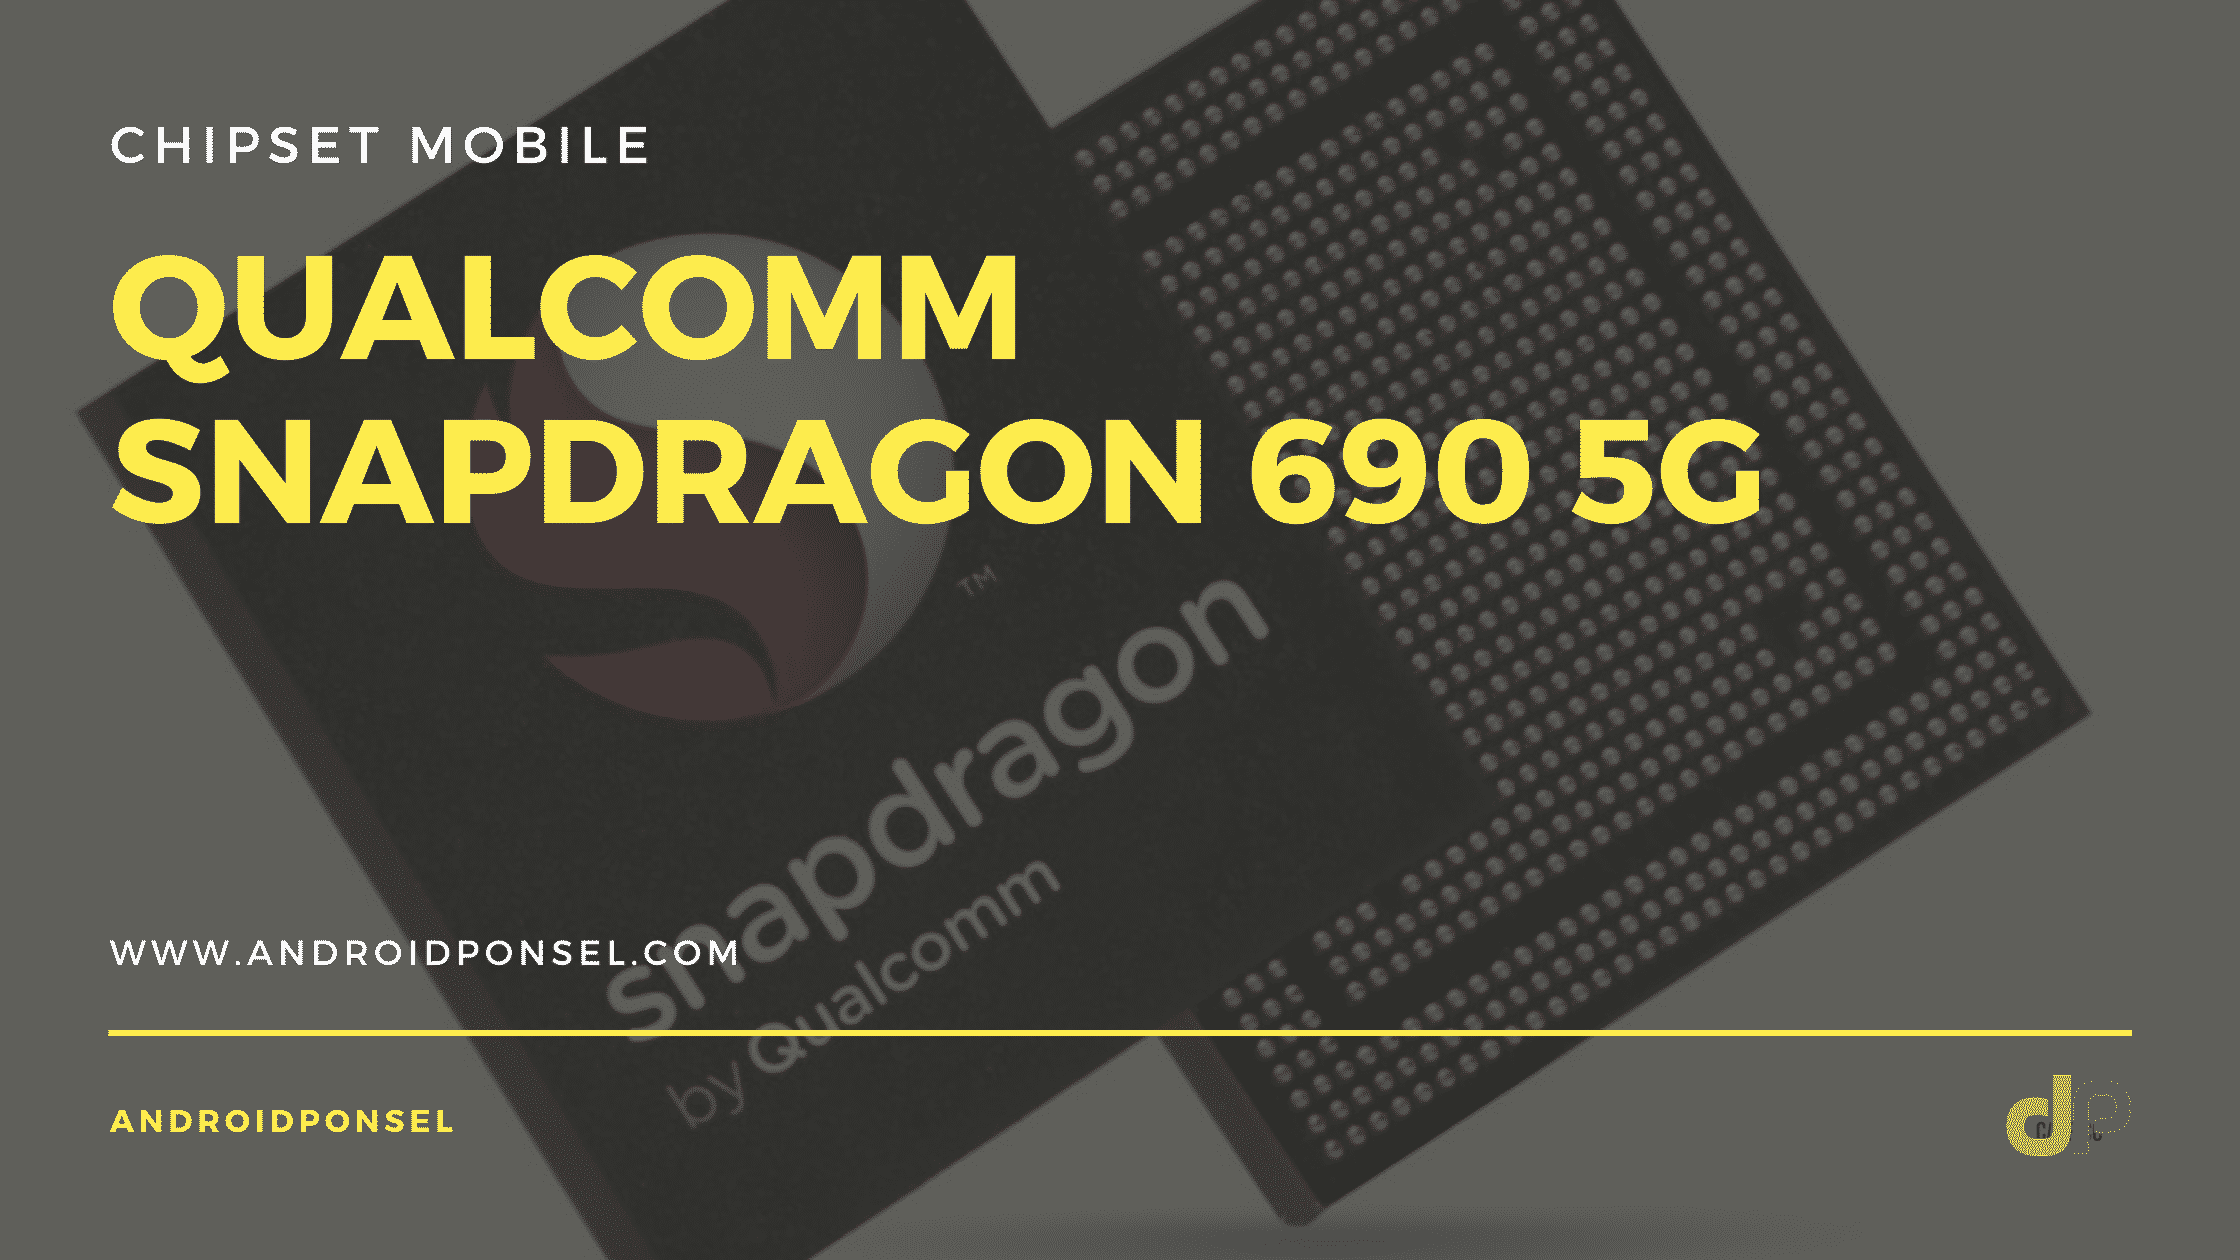 Qualcomm Snapdragon 690 5G